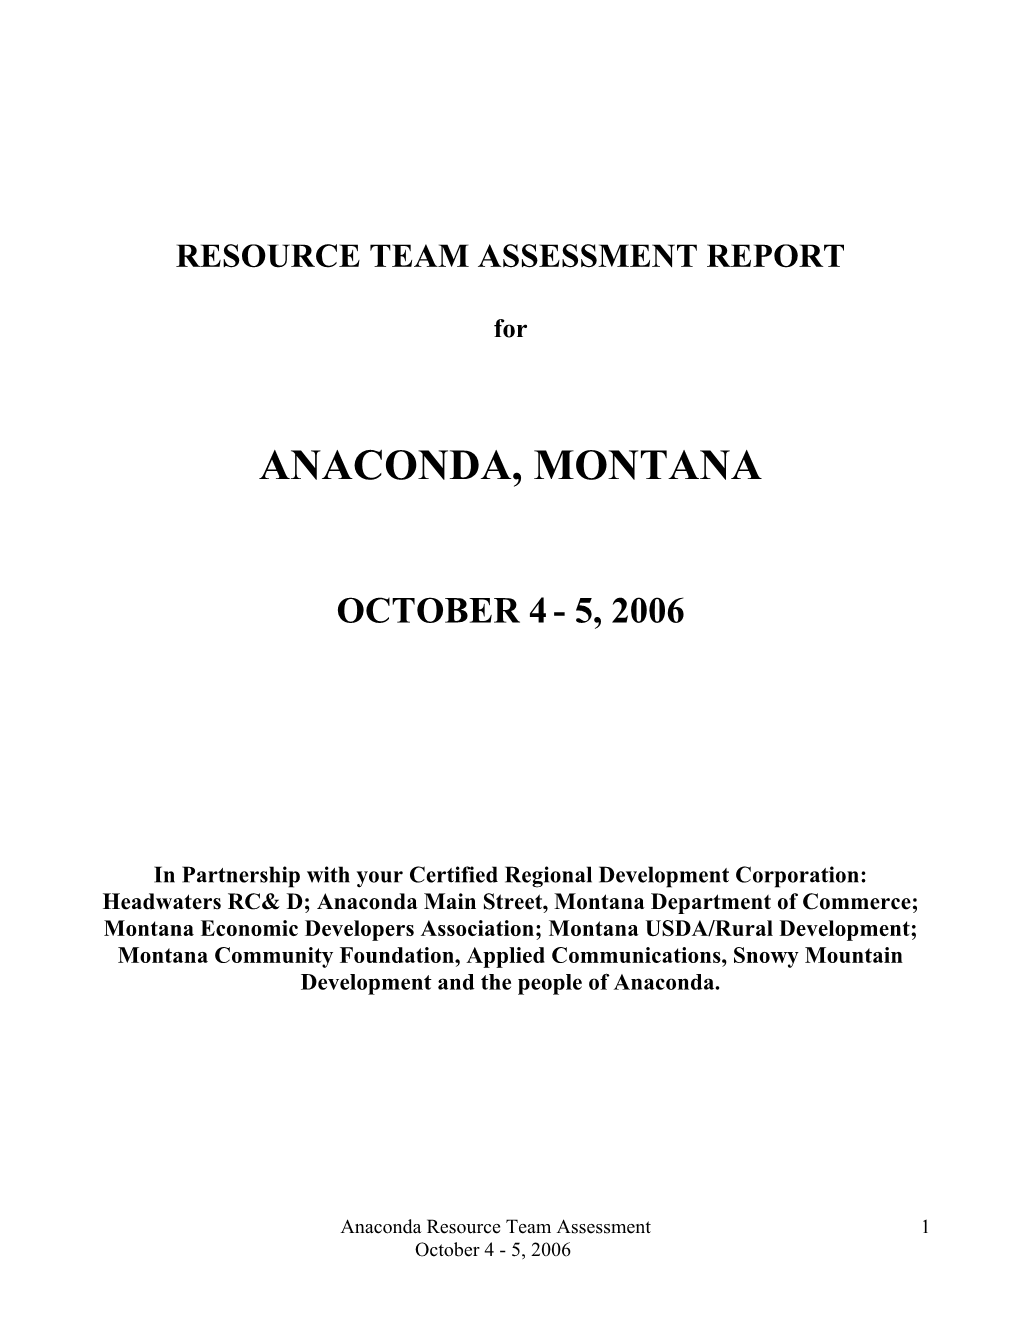 Resource Team Assessment Report